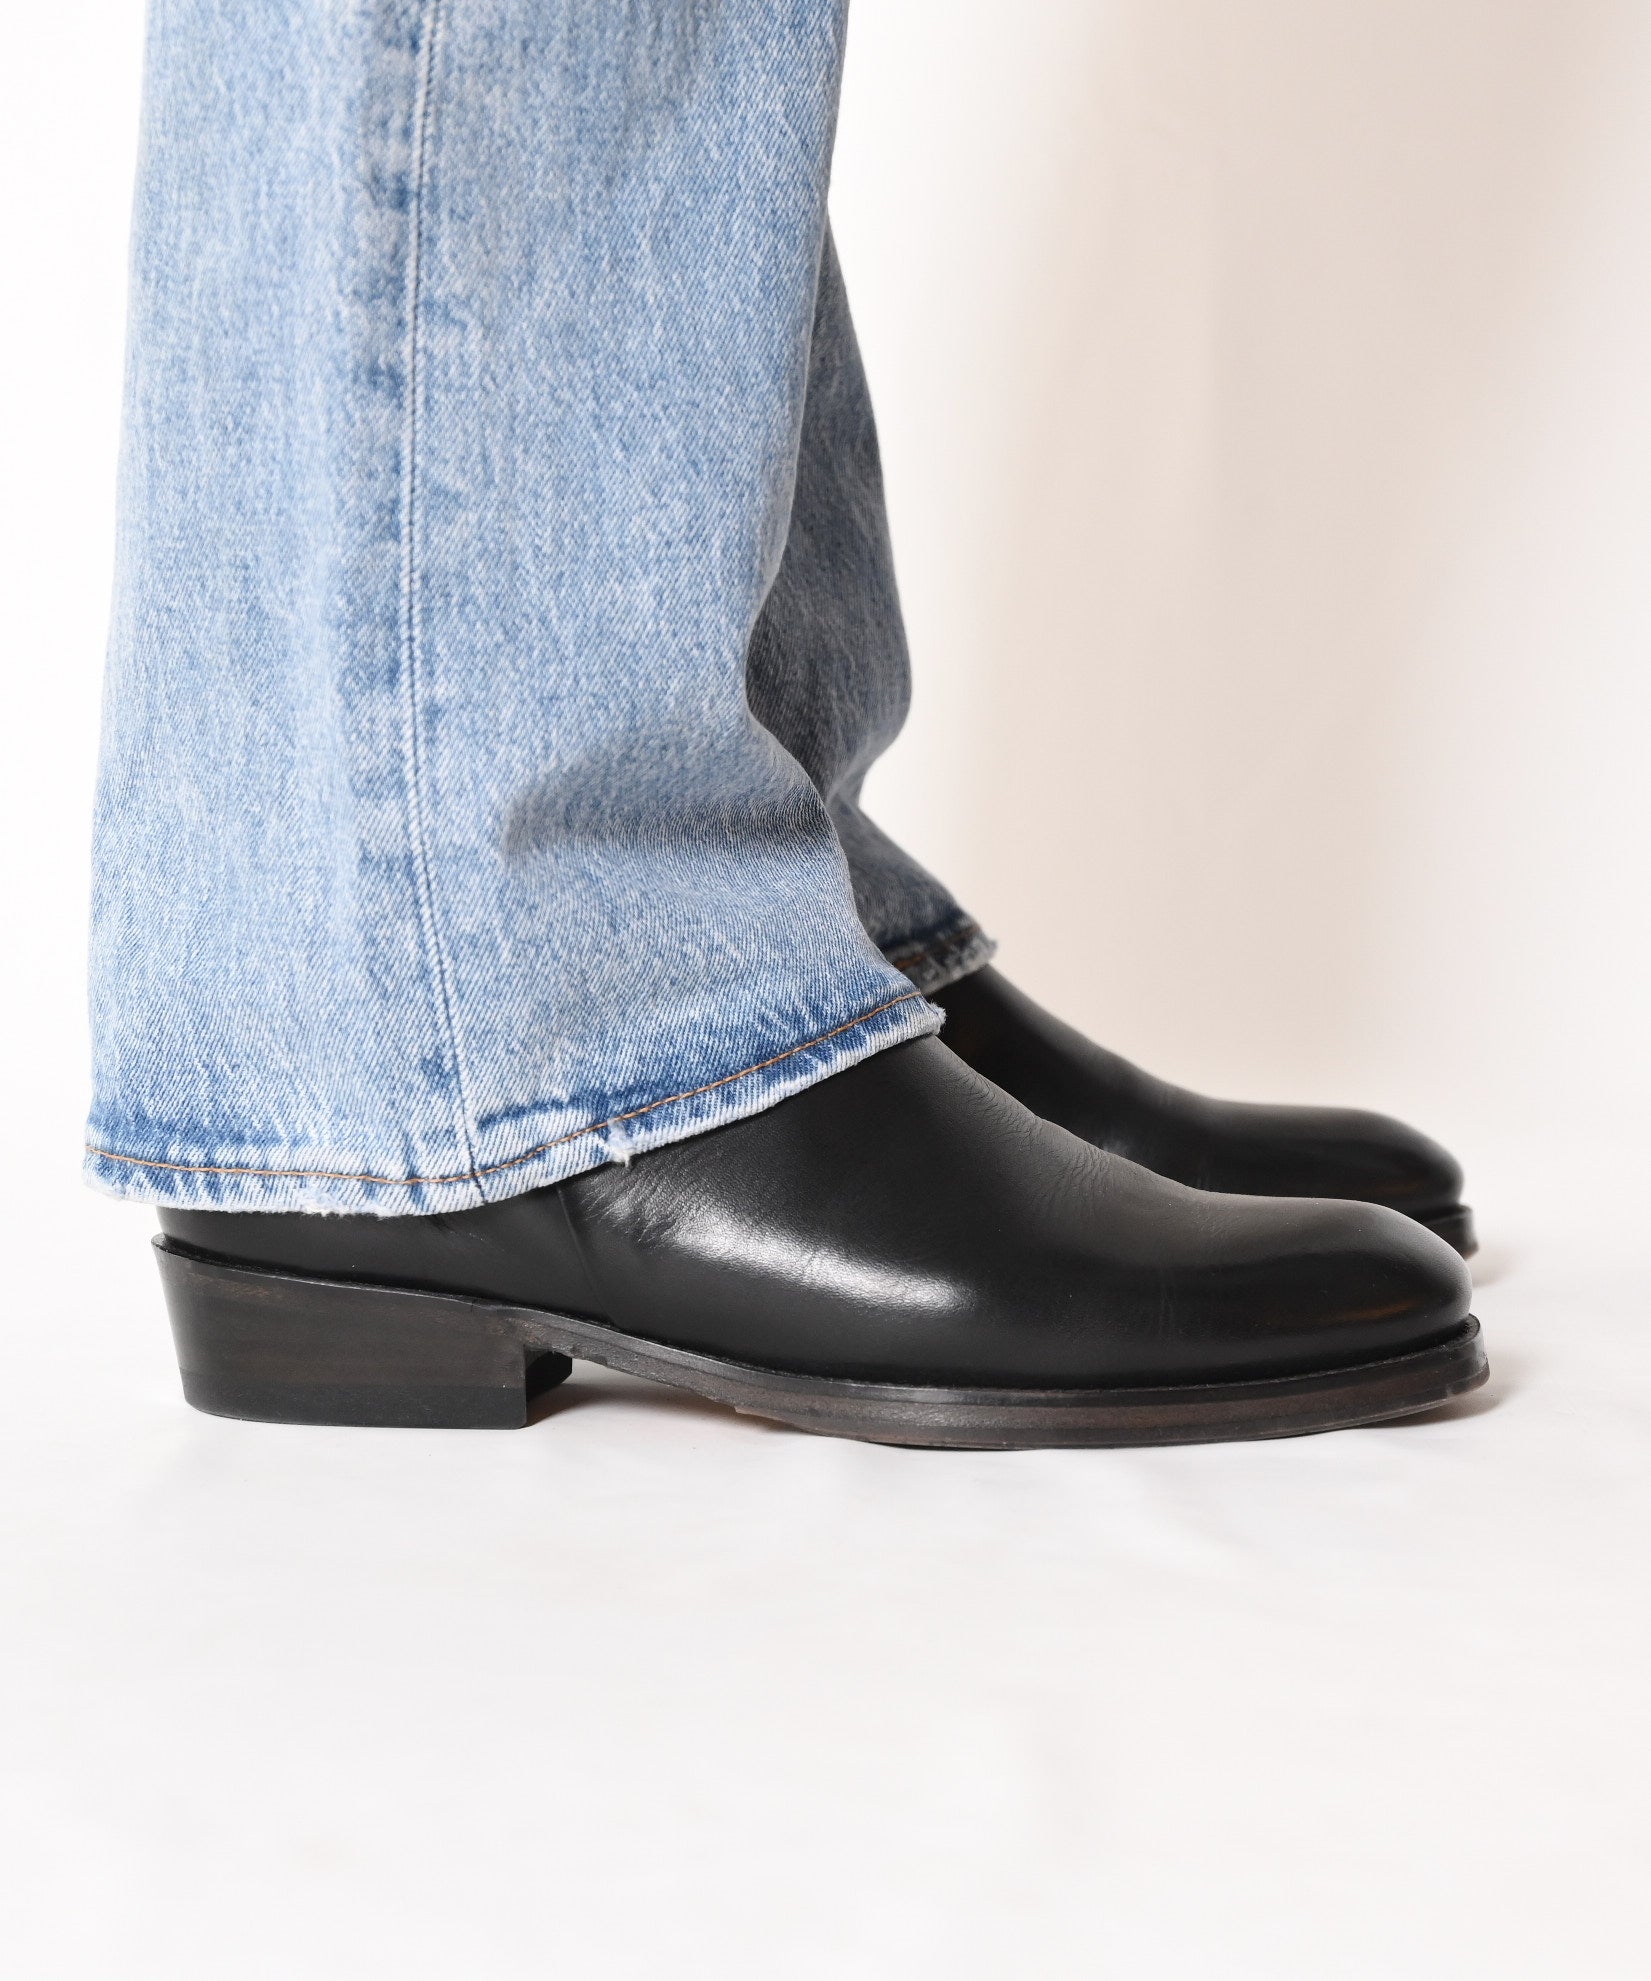 New side zip boots / ER1201